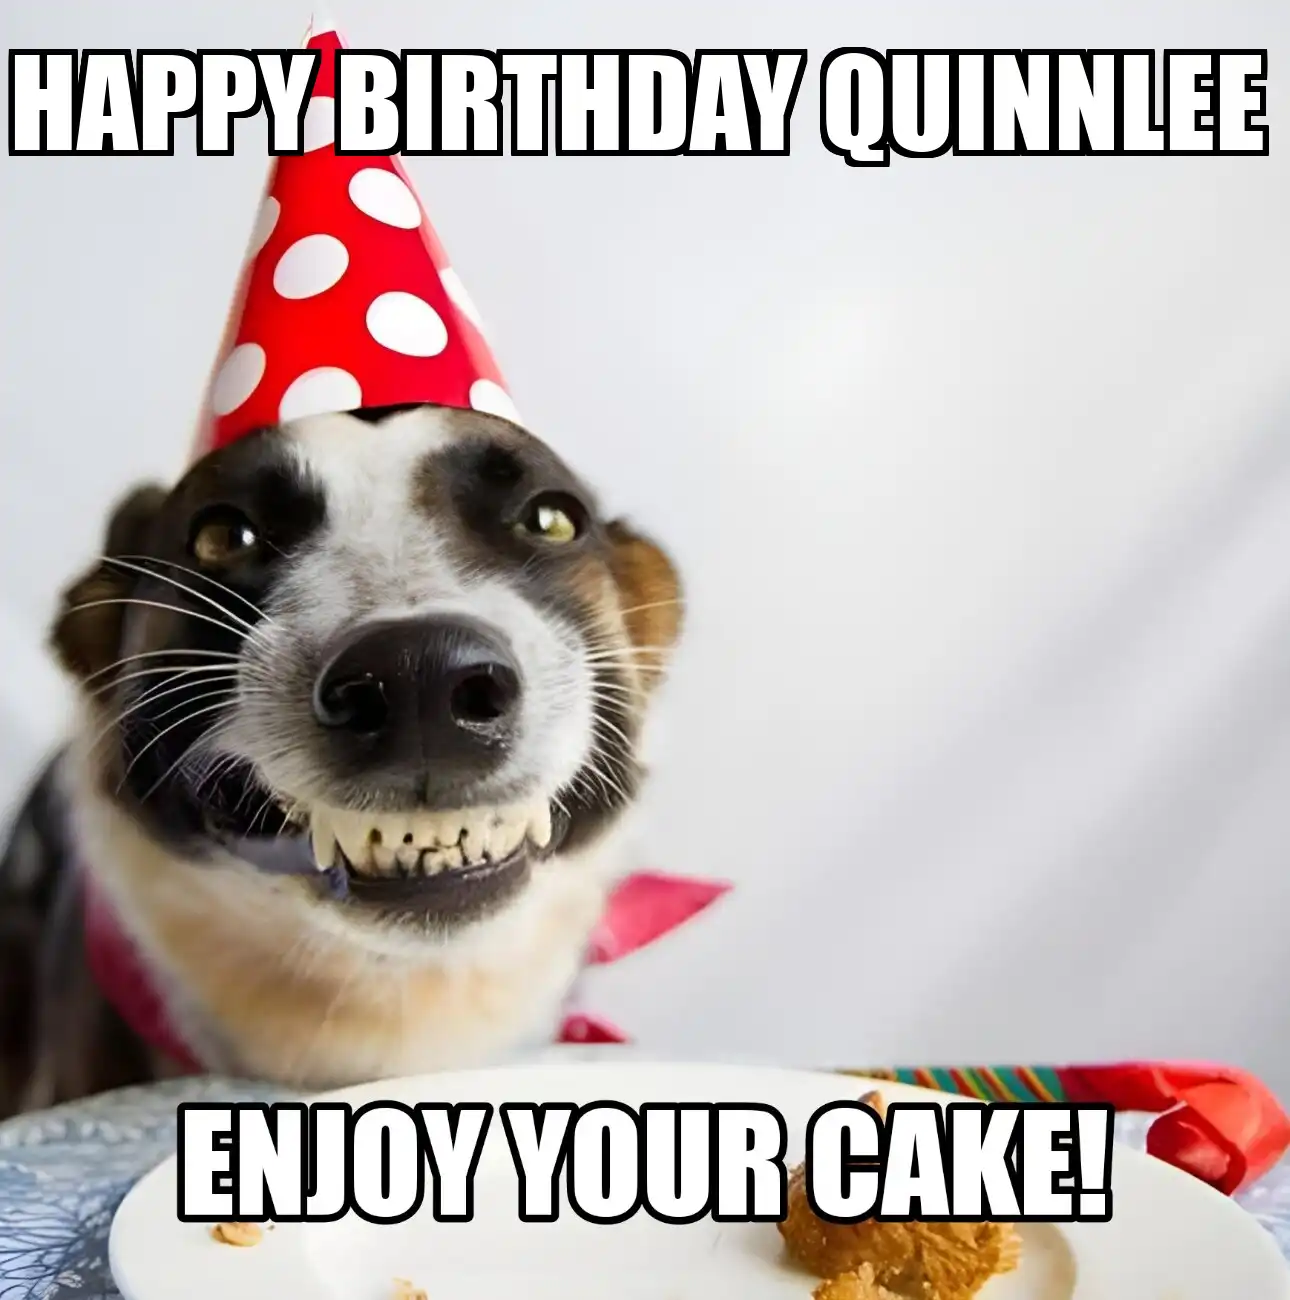 Happy Birthday Quinnlee Enjoy Your Cake Dog Meme